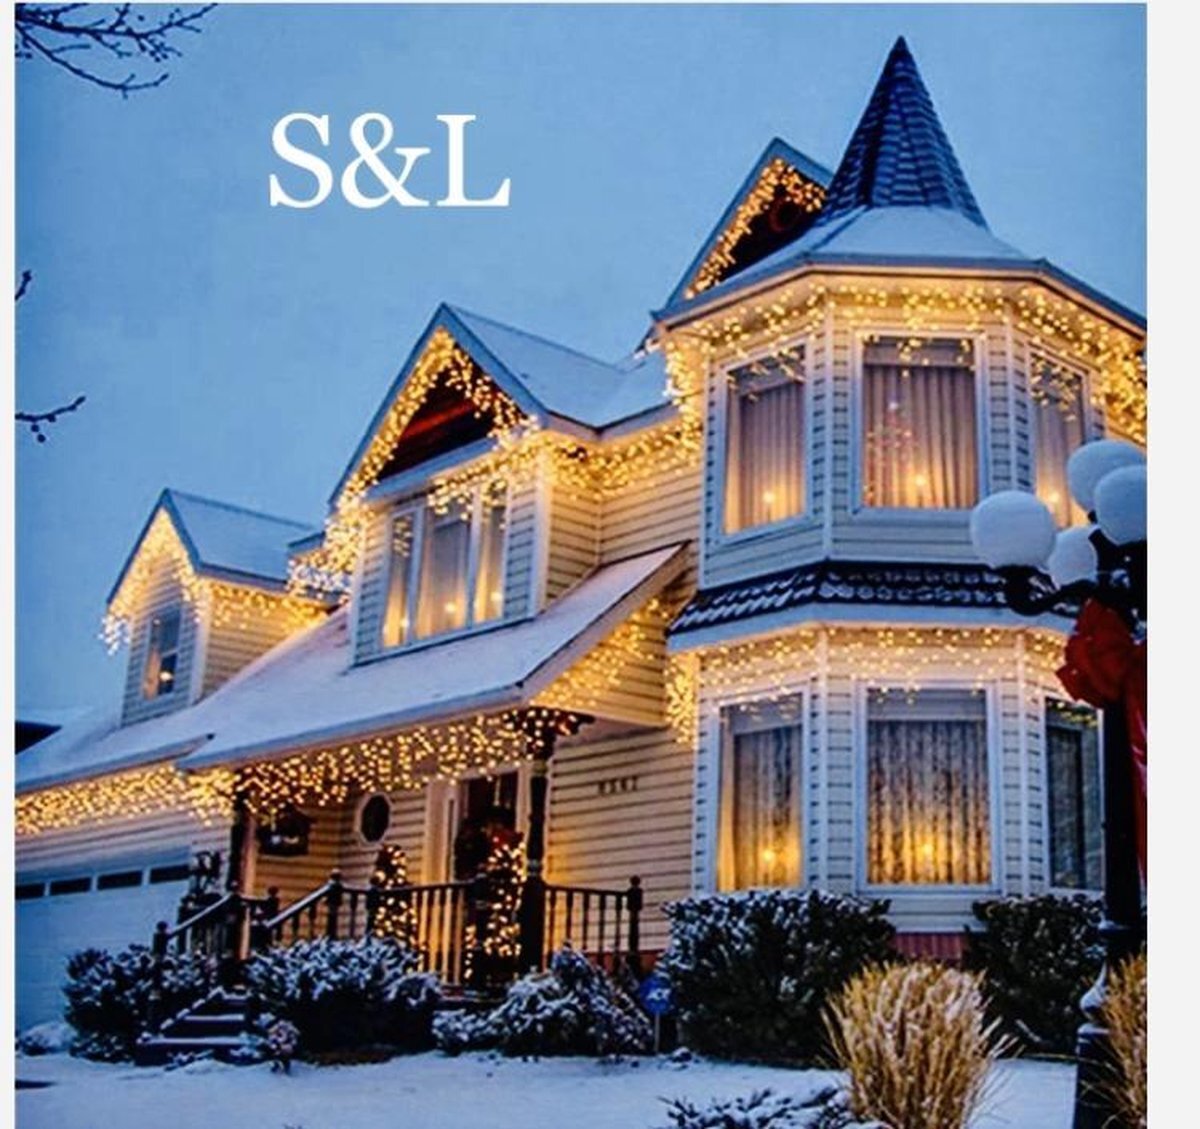 S&L LED Luxuriance Lights ijspegelverlichting 360 ledlampjes - 7M + 5M snoer - buiten